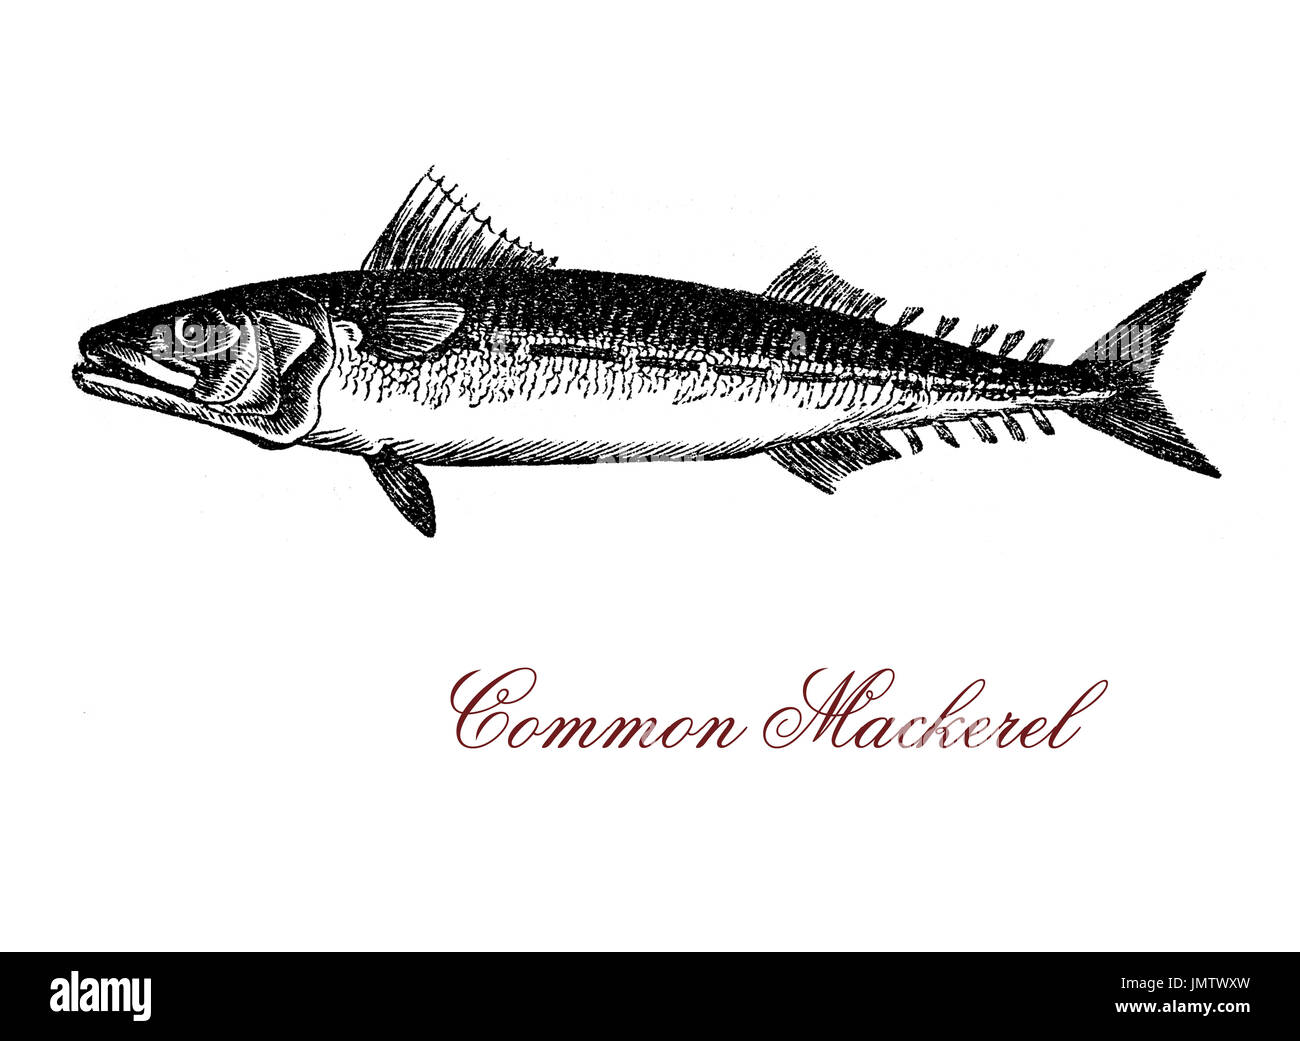 Atlantic mackerel common mackerel scomber Cut Out Stock Images ...